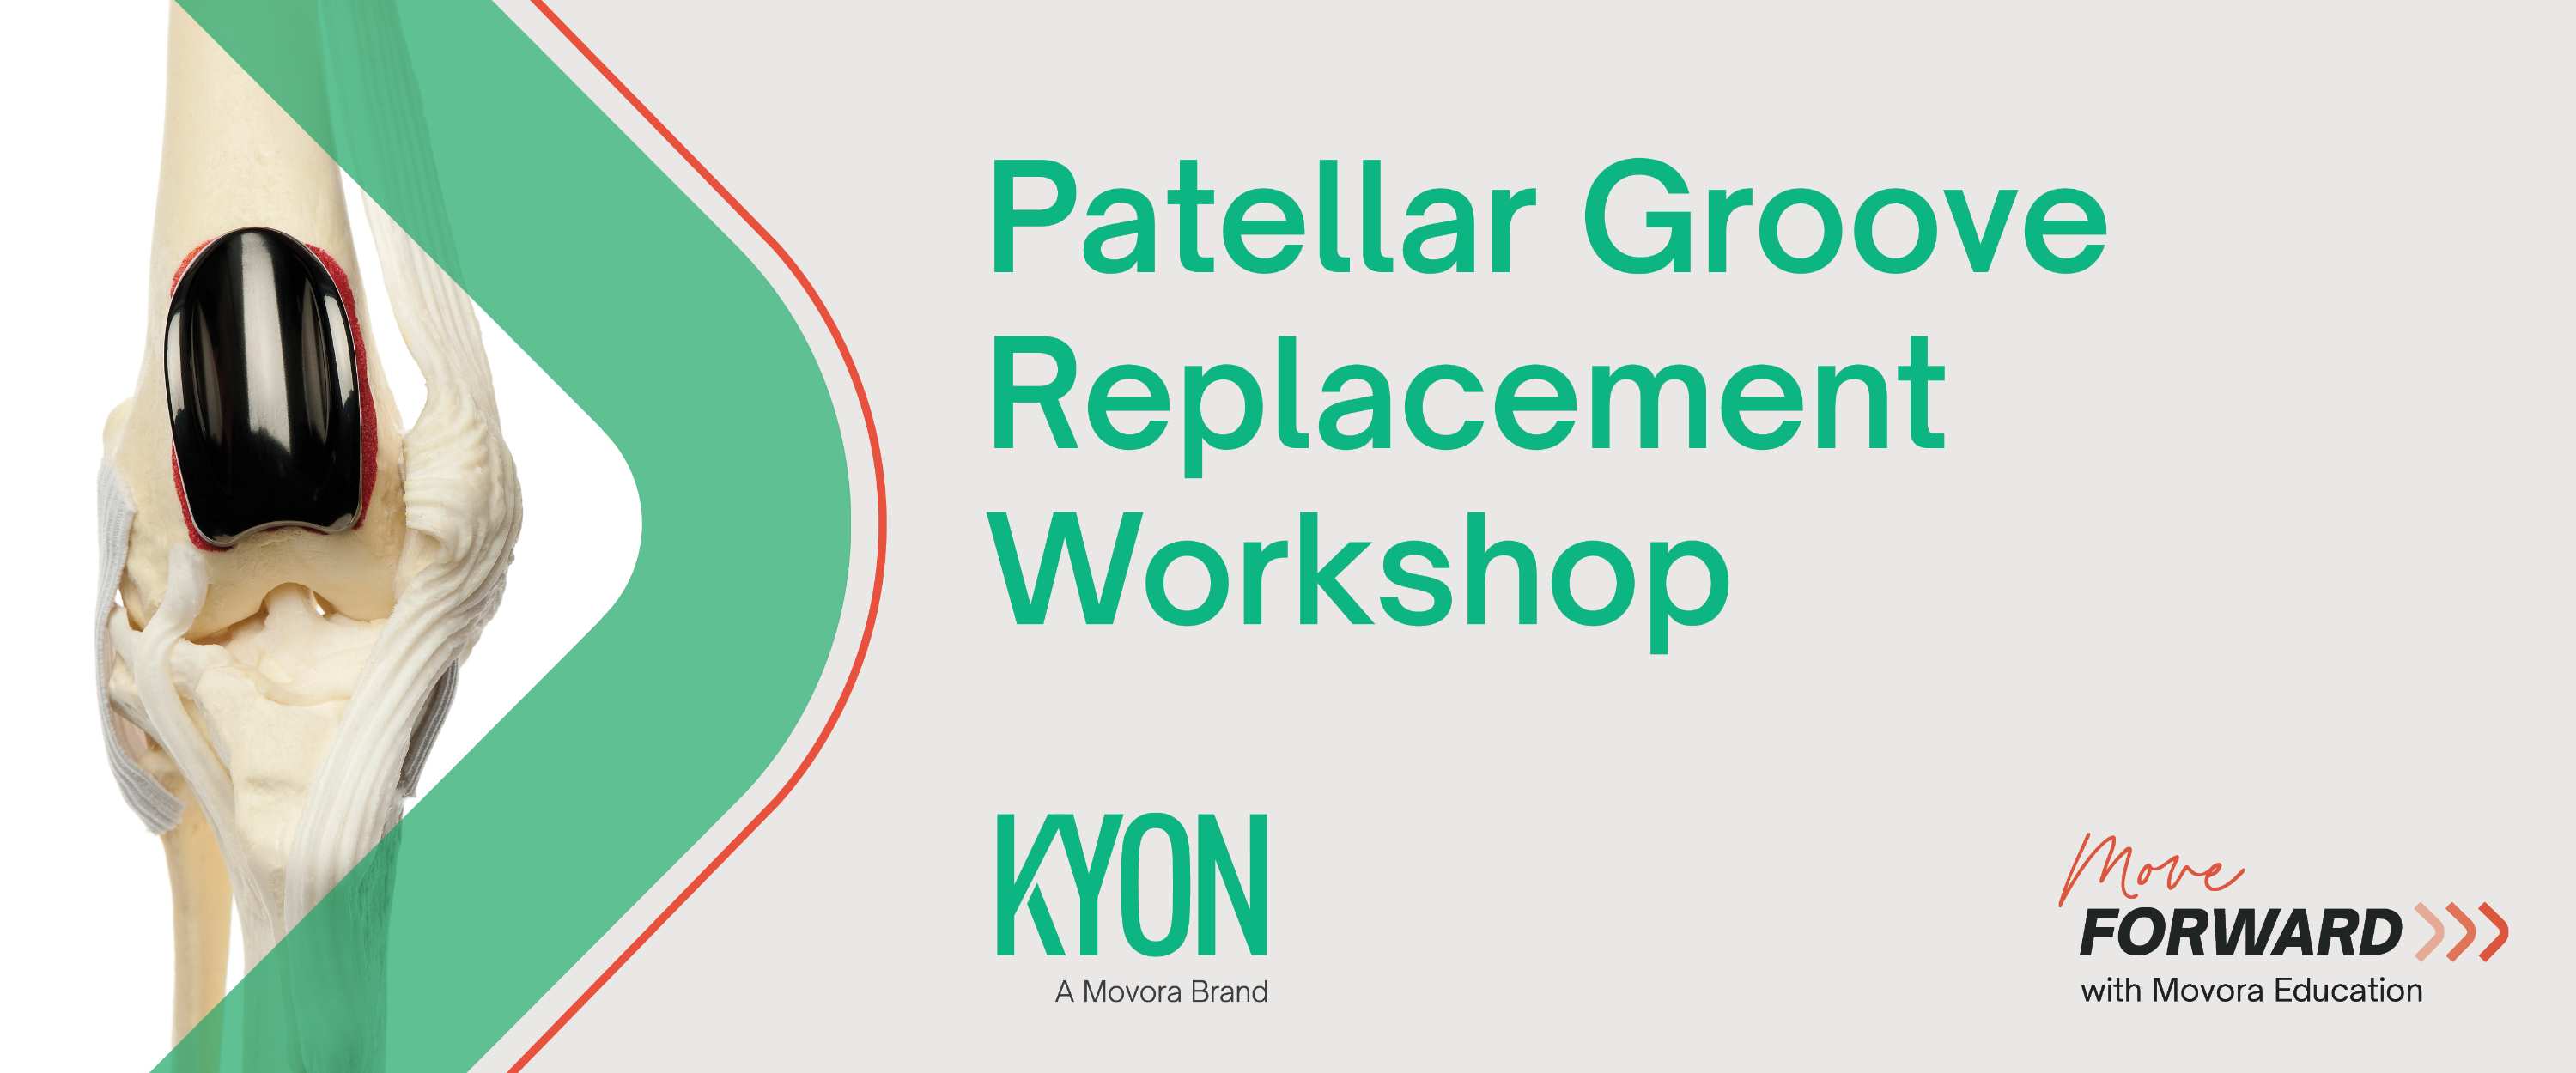 Kyon patellar groove replacement workshop banner